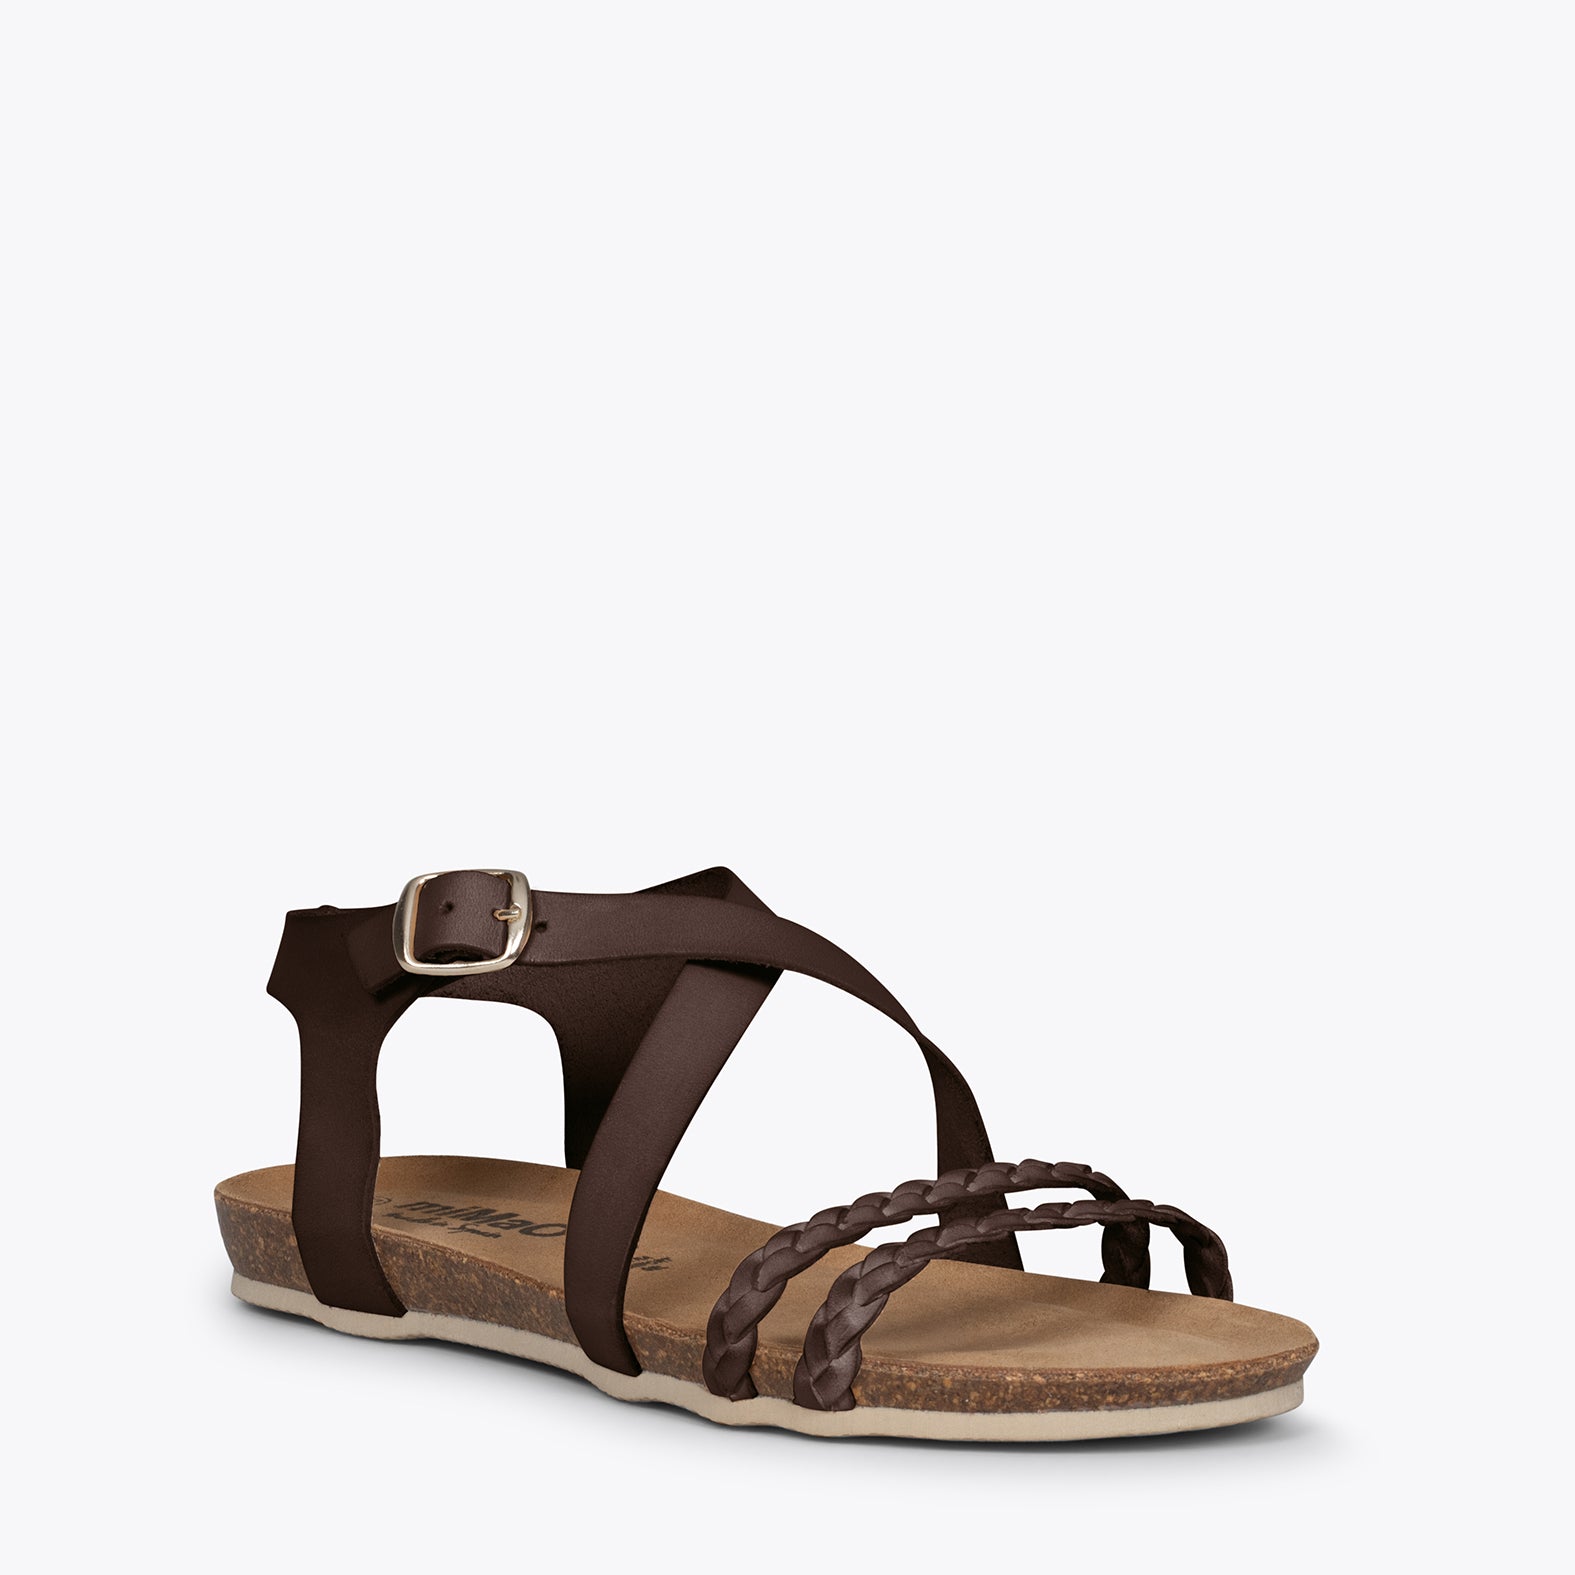 INDIE – BROWN BIO sandals with straps